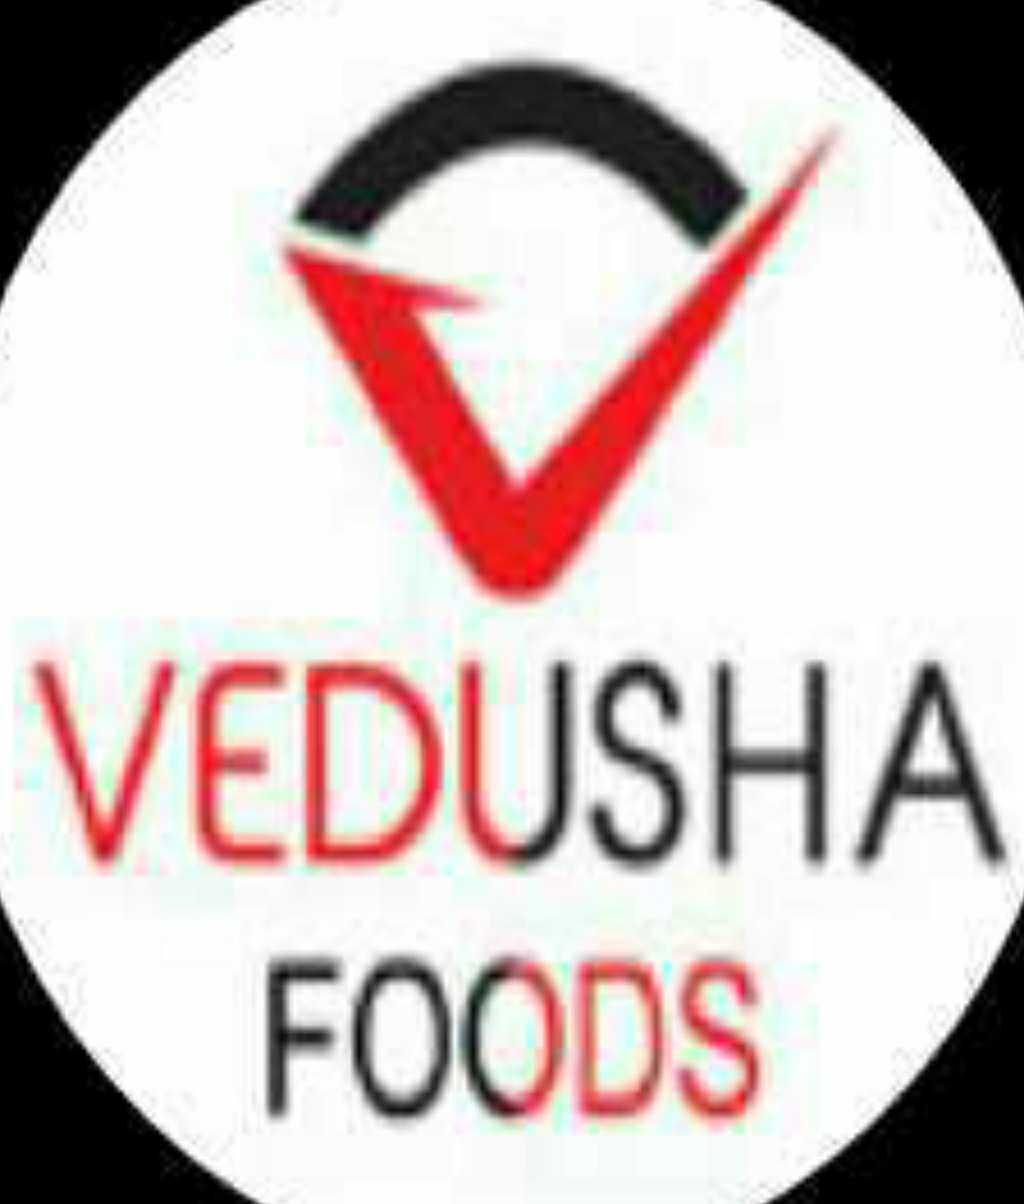 Vedusha Foods